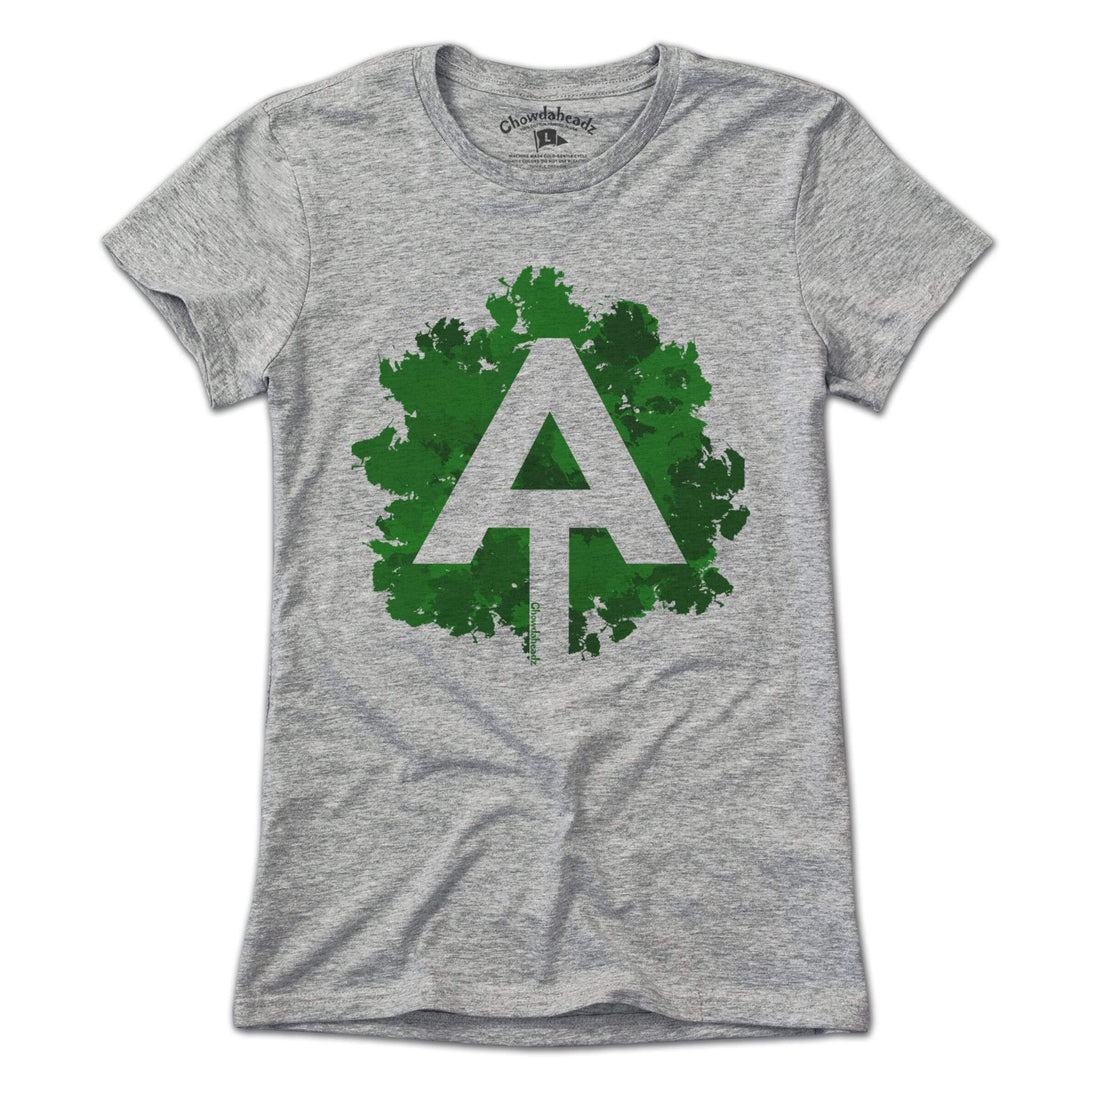 Appalachian Trail Foliage T-Shirt - Chowdaheadz